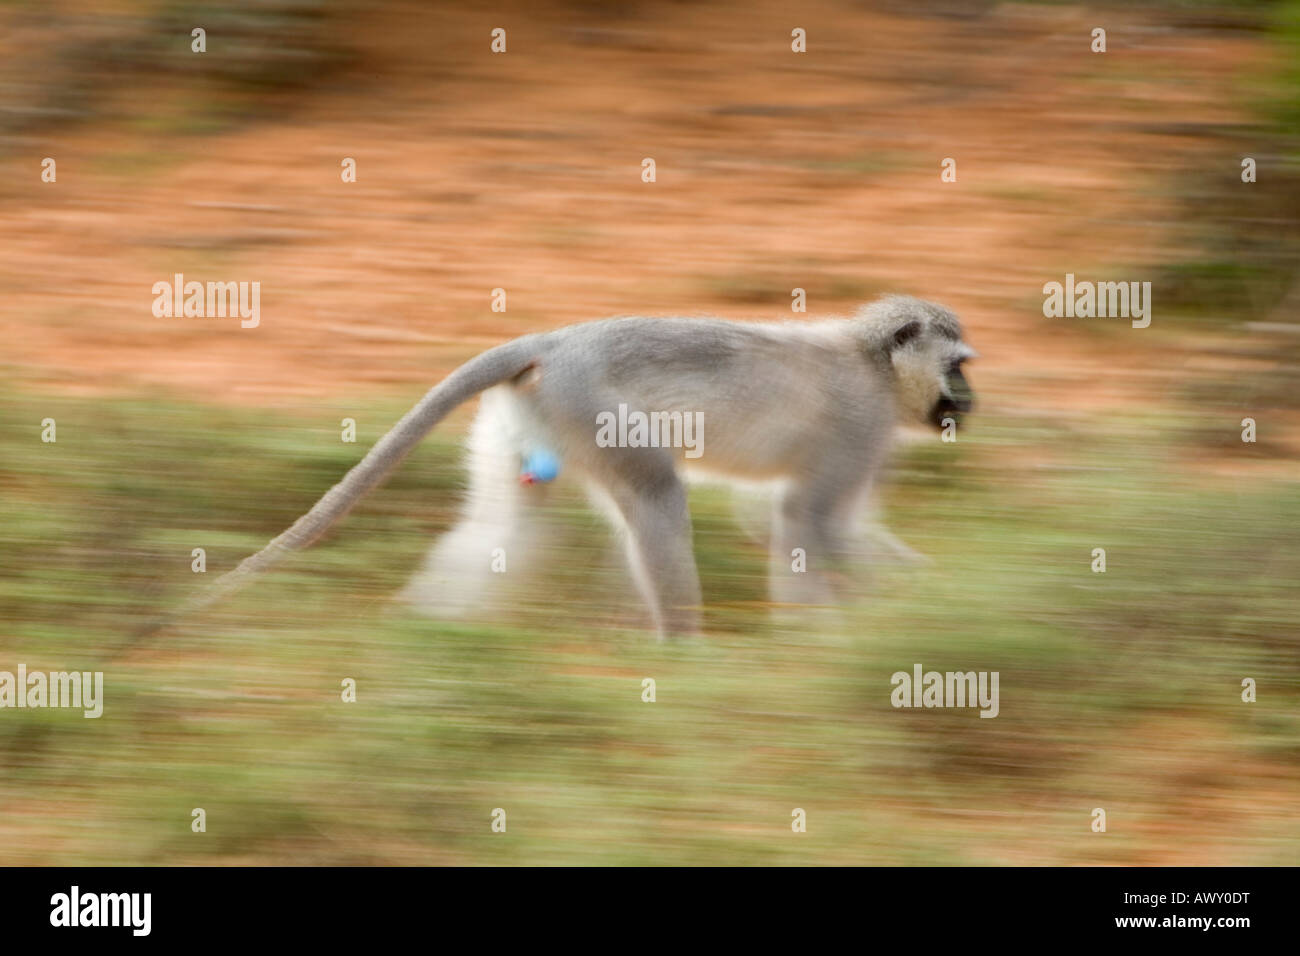 Scimmia Vervet Chlorocebus pygerythrus spostandosi a sud africa Foto Stock